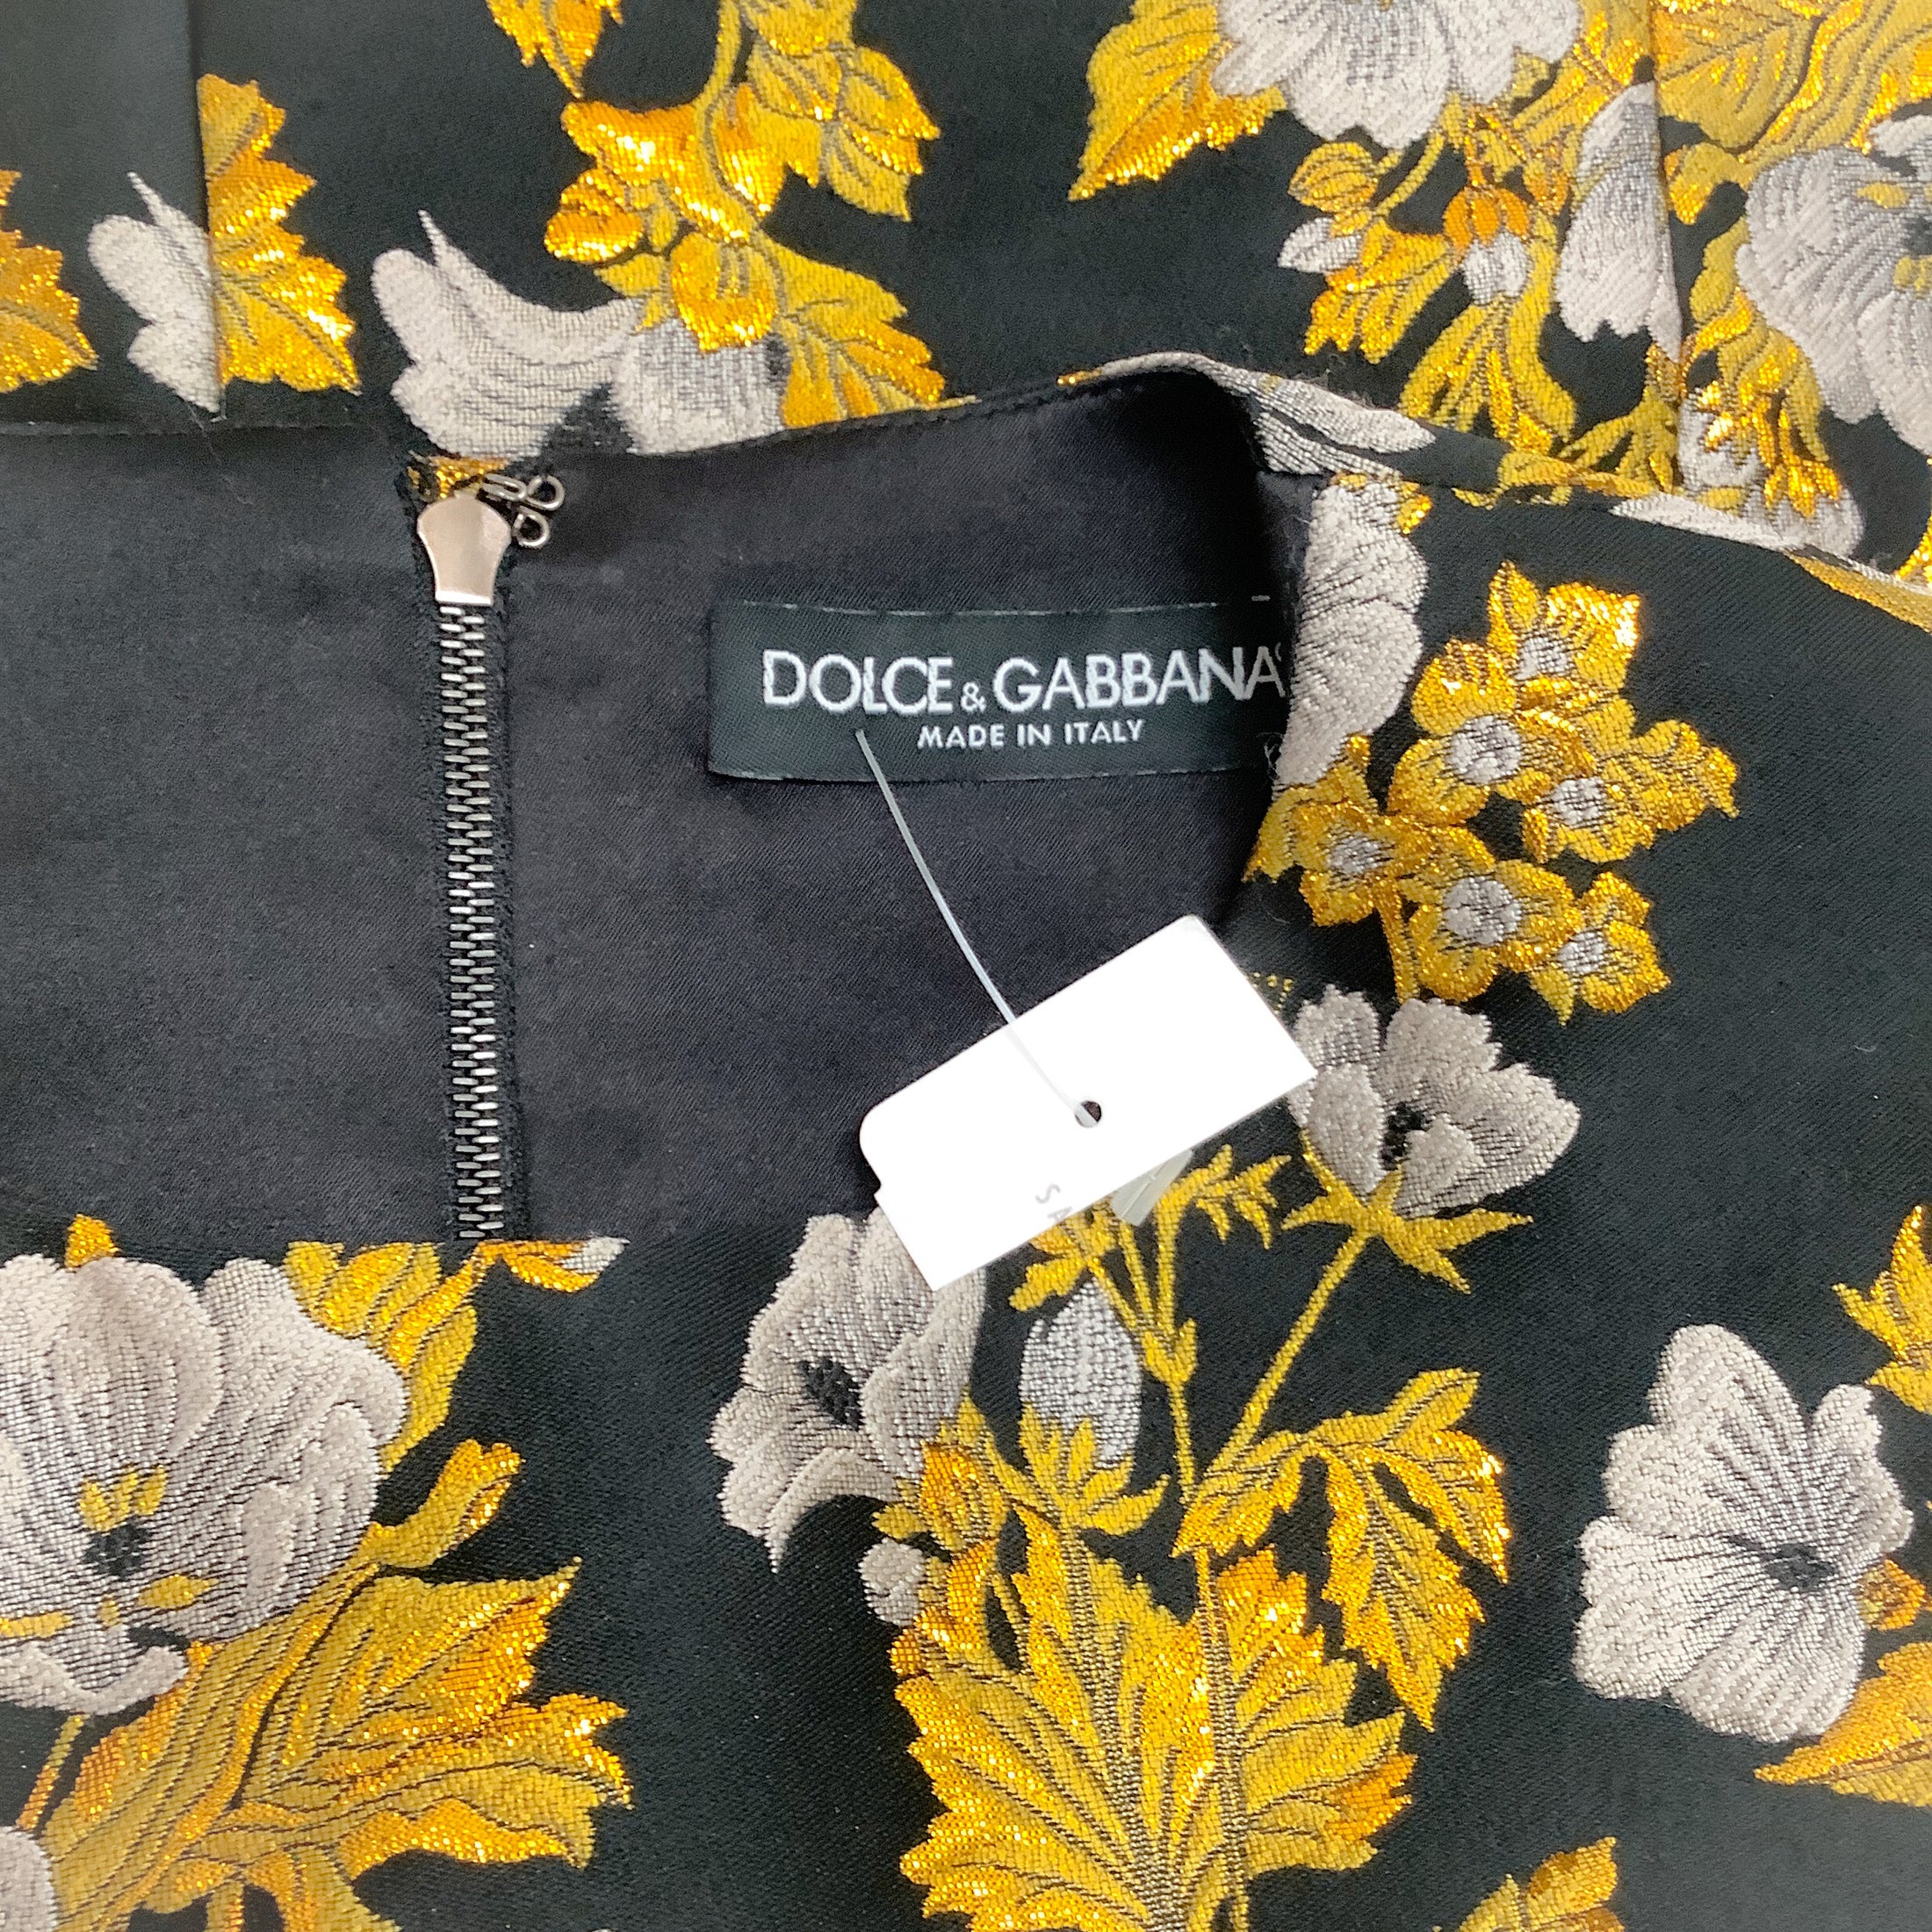 Dolce & Gabbana Black / Gold Floral Brocade Sleeveless Dress